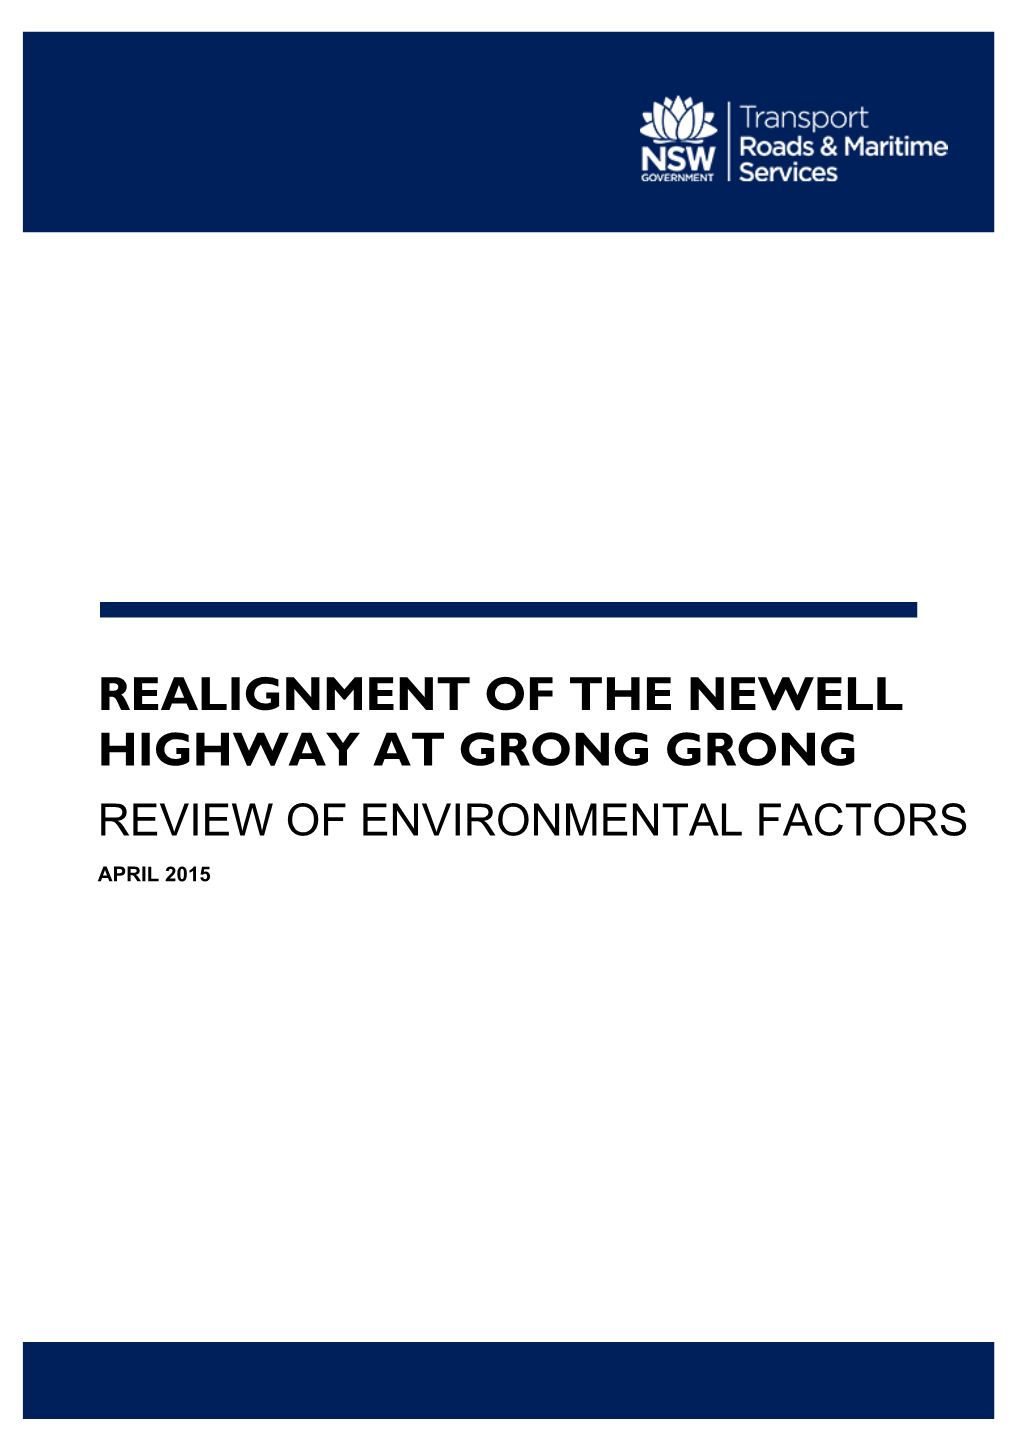 Grong Grong Review of Environmental Factors April 2015